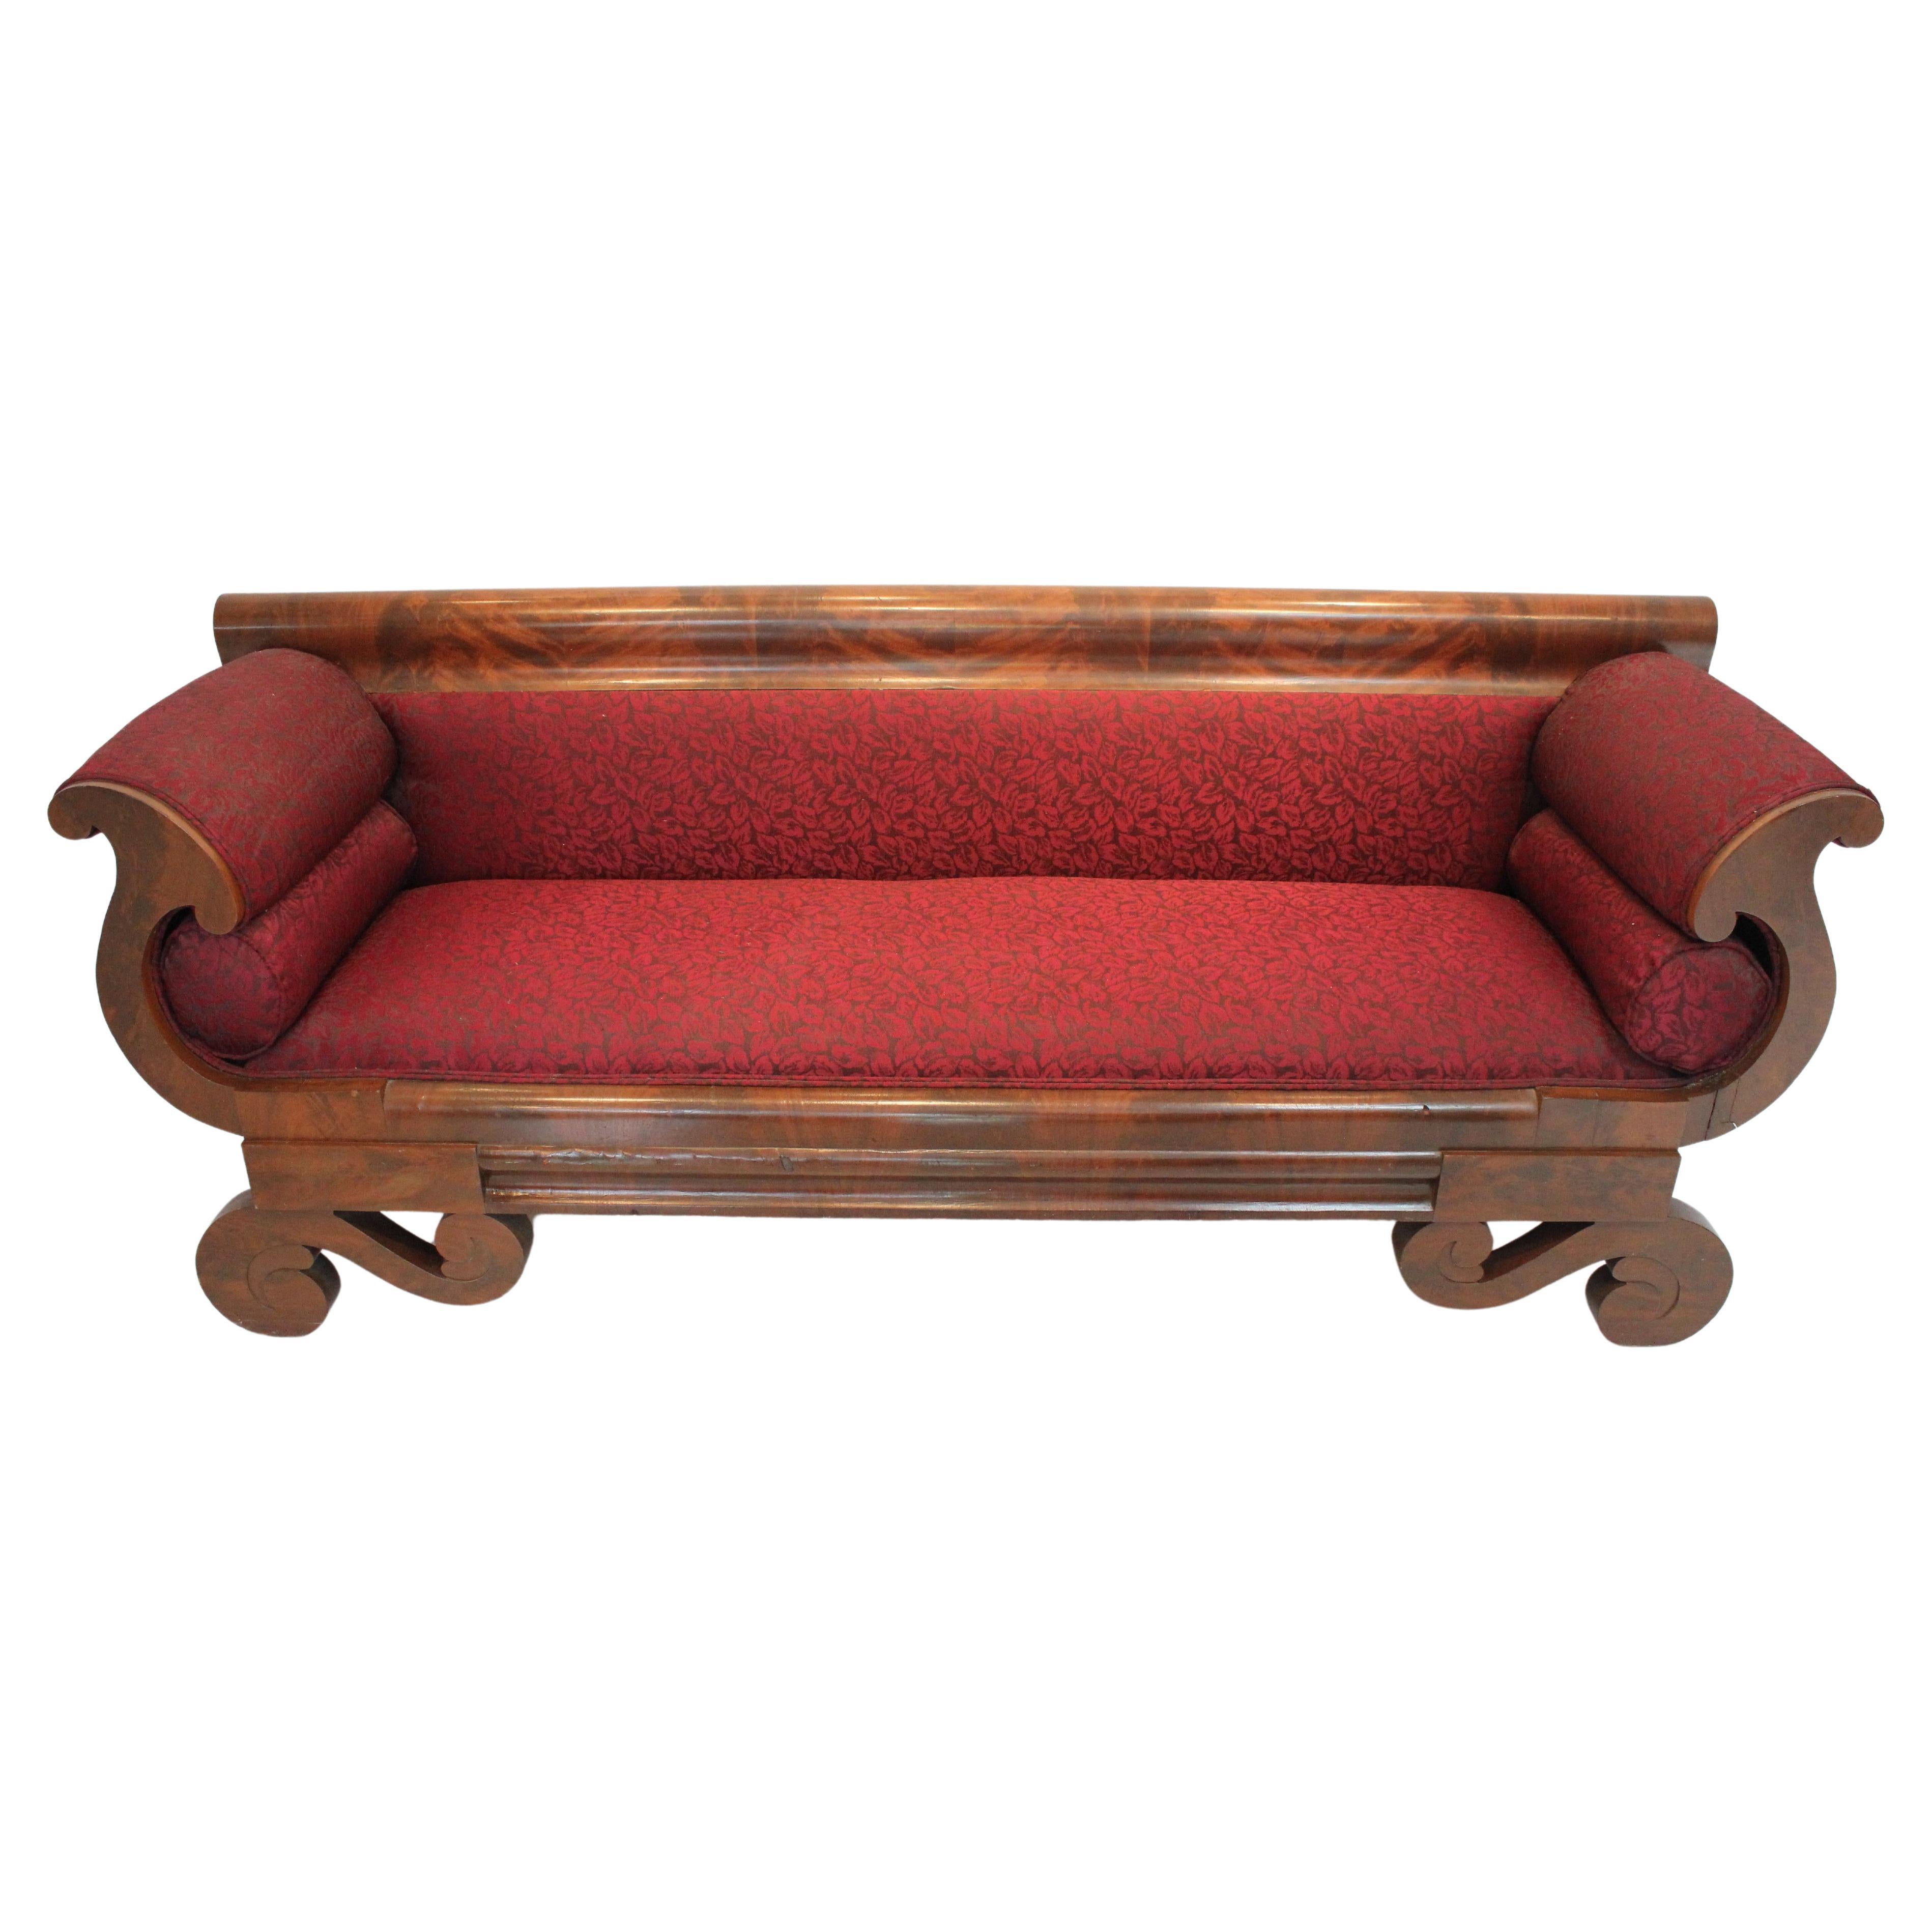 Period Antique American Classical Empire Flame Mahogany Sofa Circa 1840